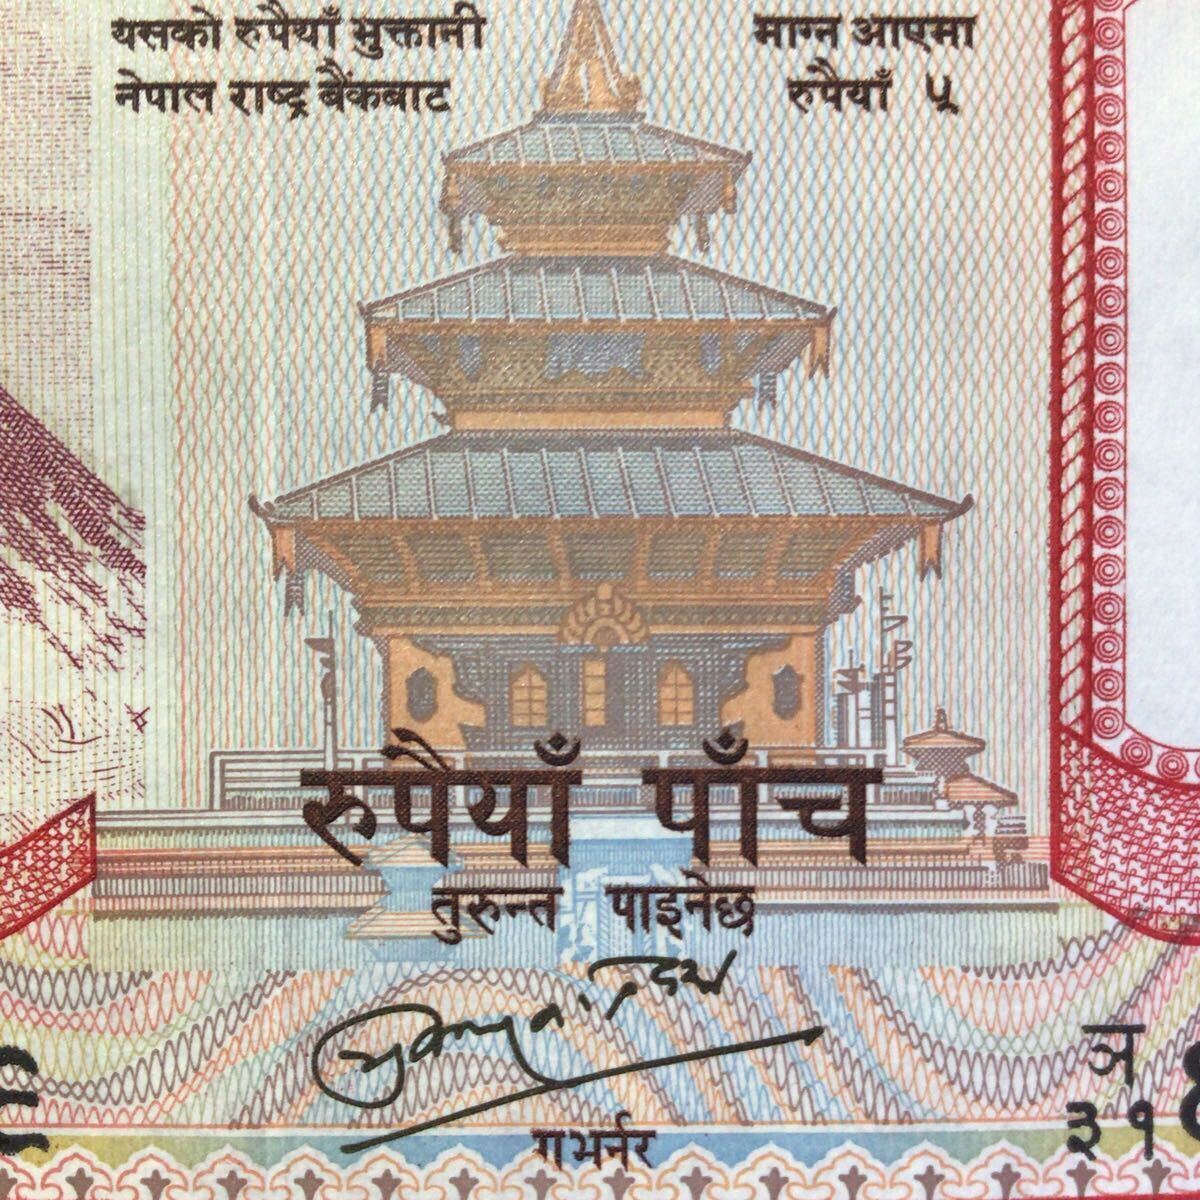 World Paper Money NEPAL 5 Rupees【2008】〔Mt.Everest〕の画像3